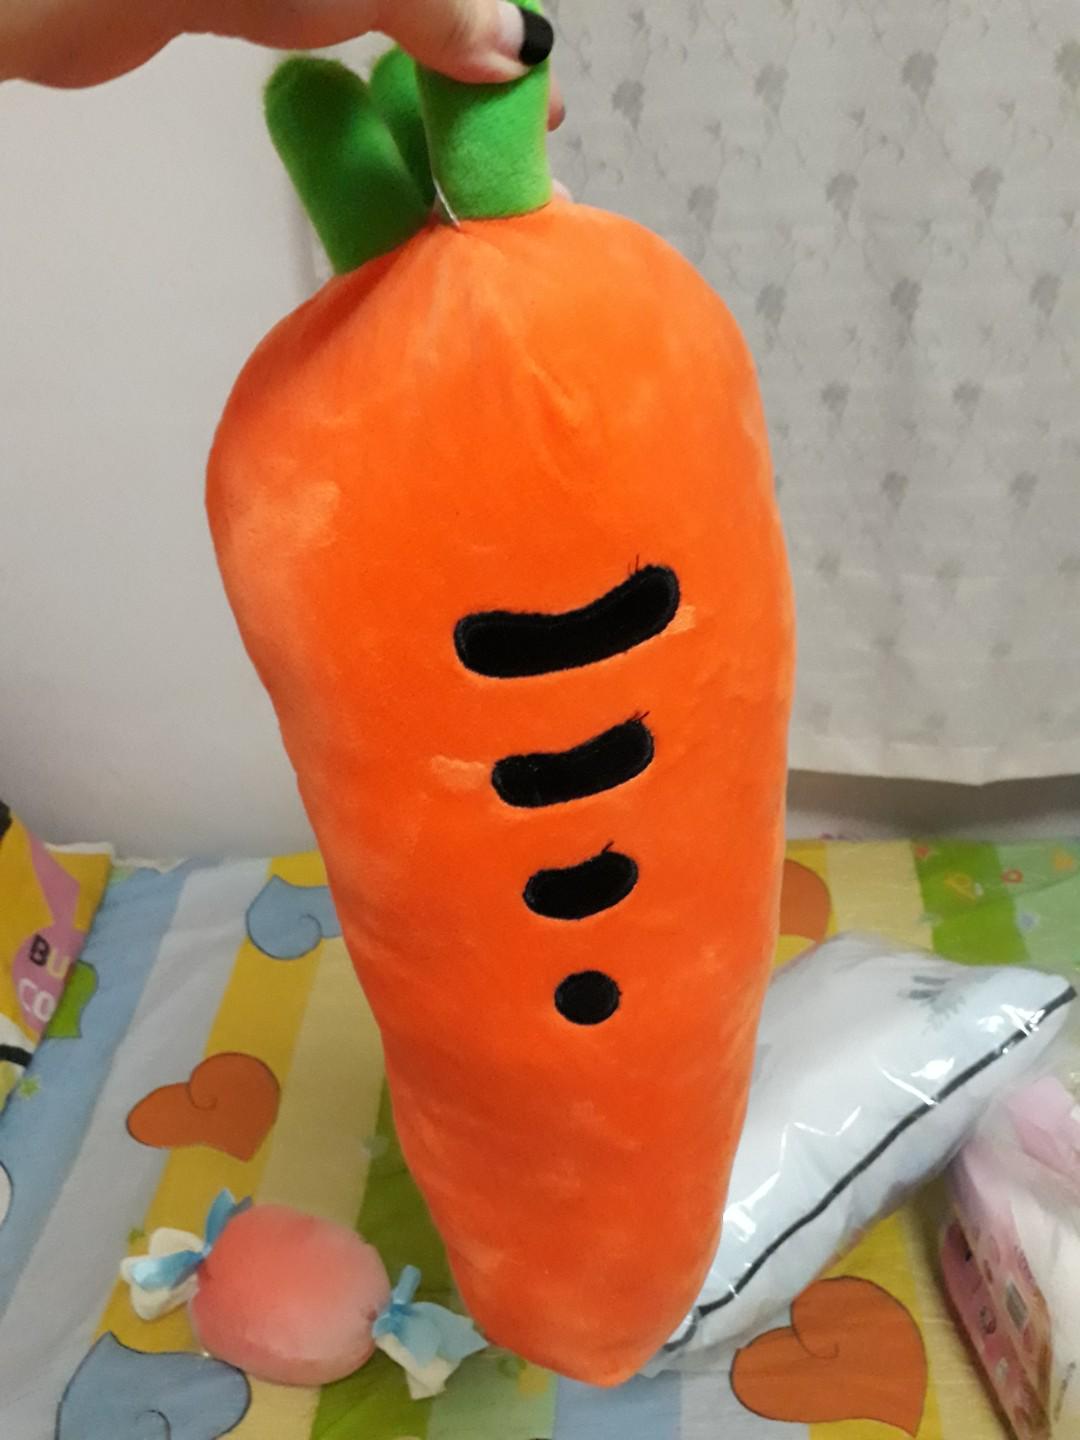 giant carrot plush